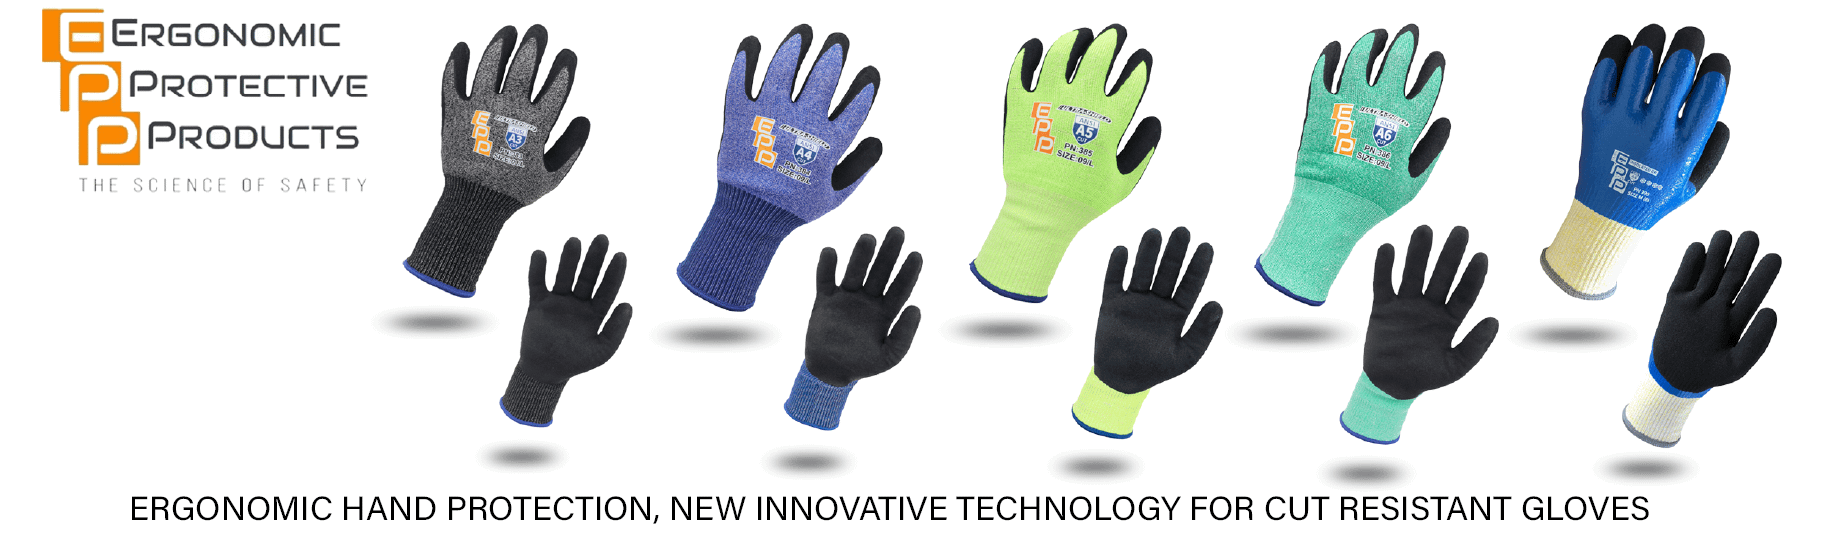 NACH Marketing - EPP - Ergonomic Hand Protection, Cut Resistant Gloves